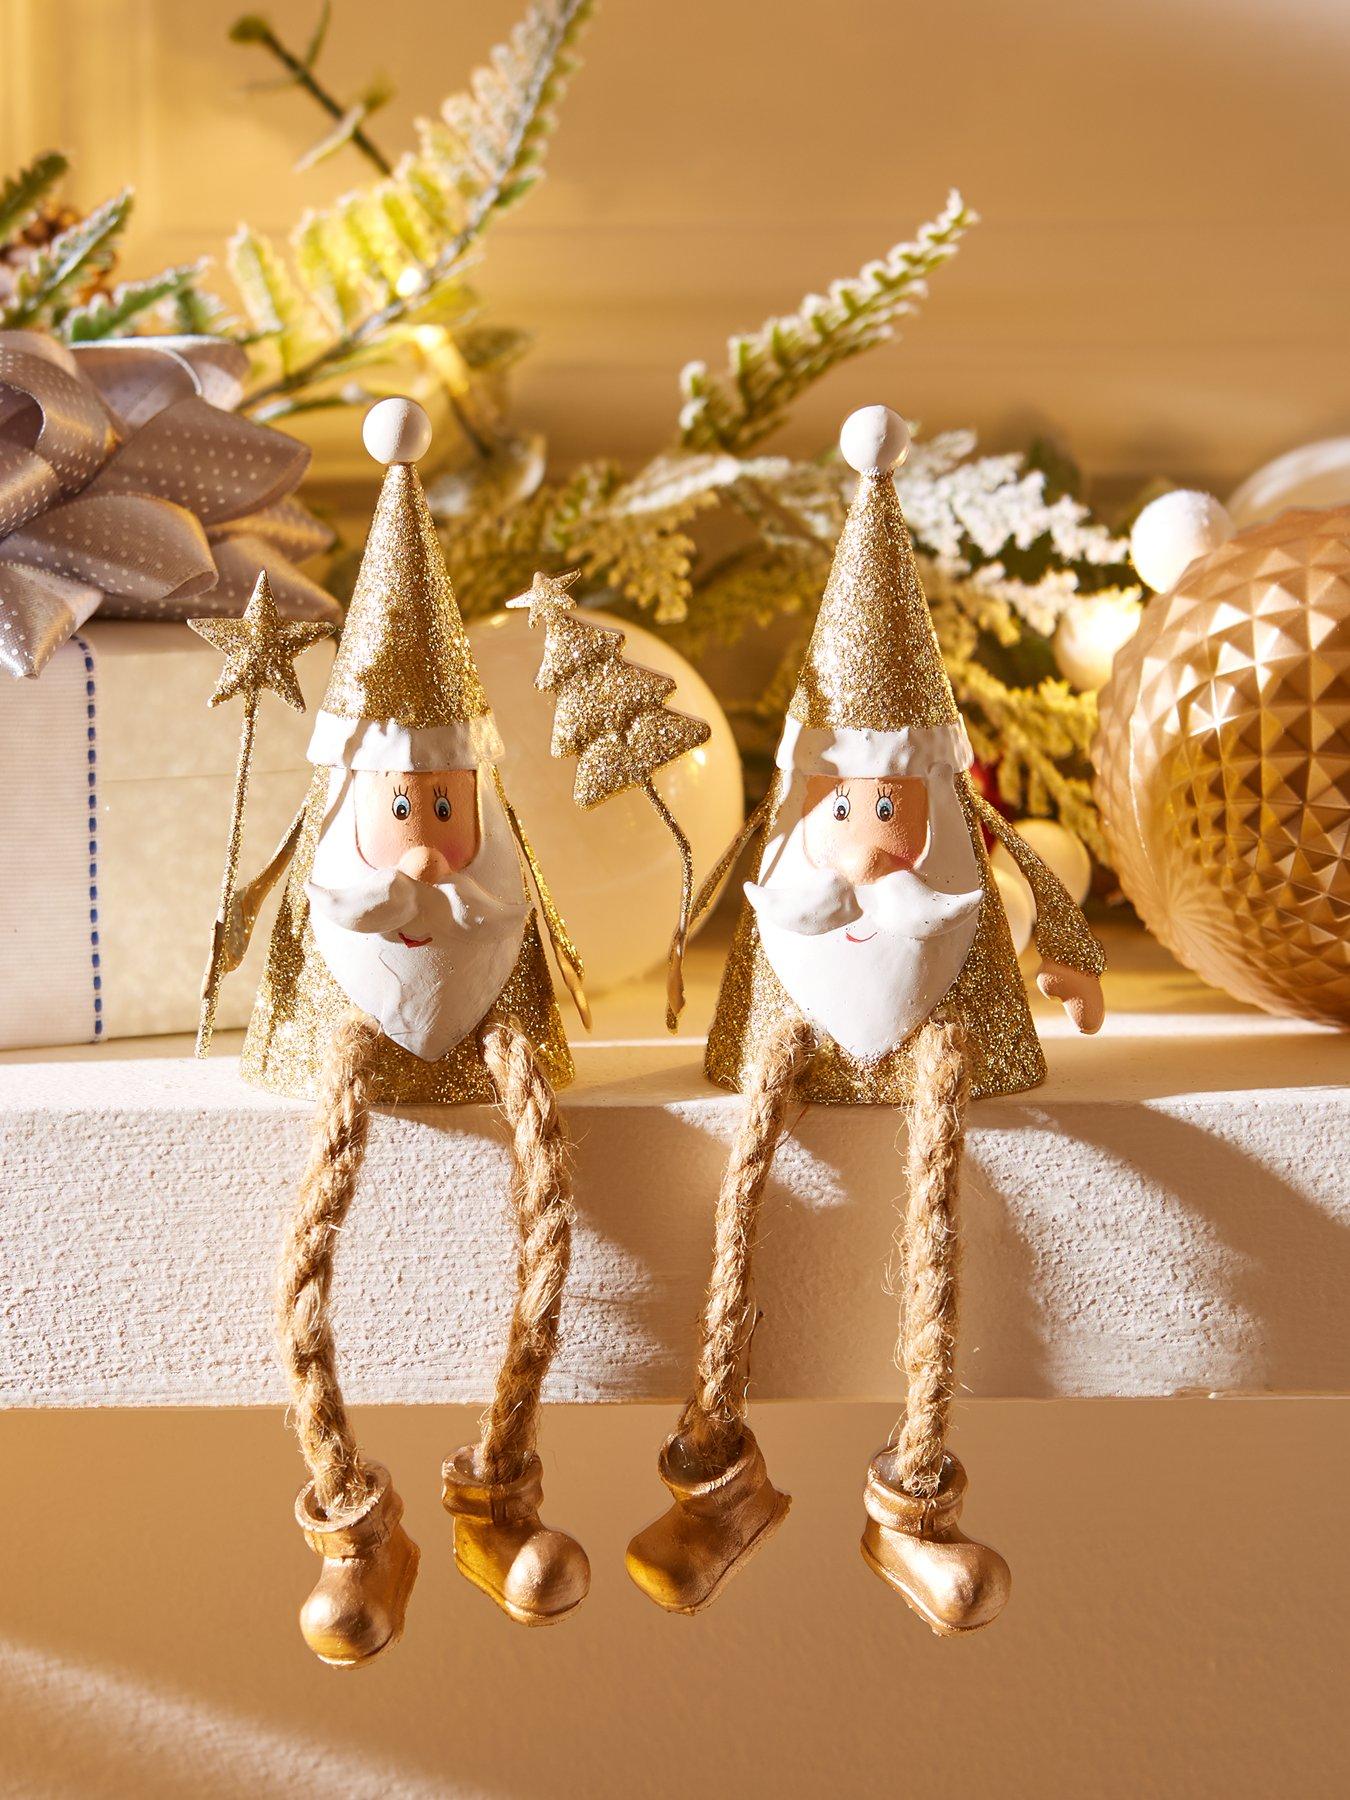 Details about   Christmas xmas ornaments decorations 